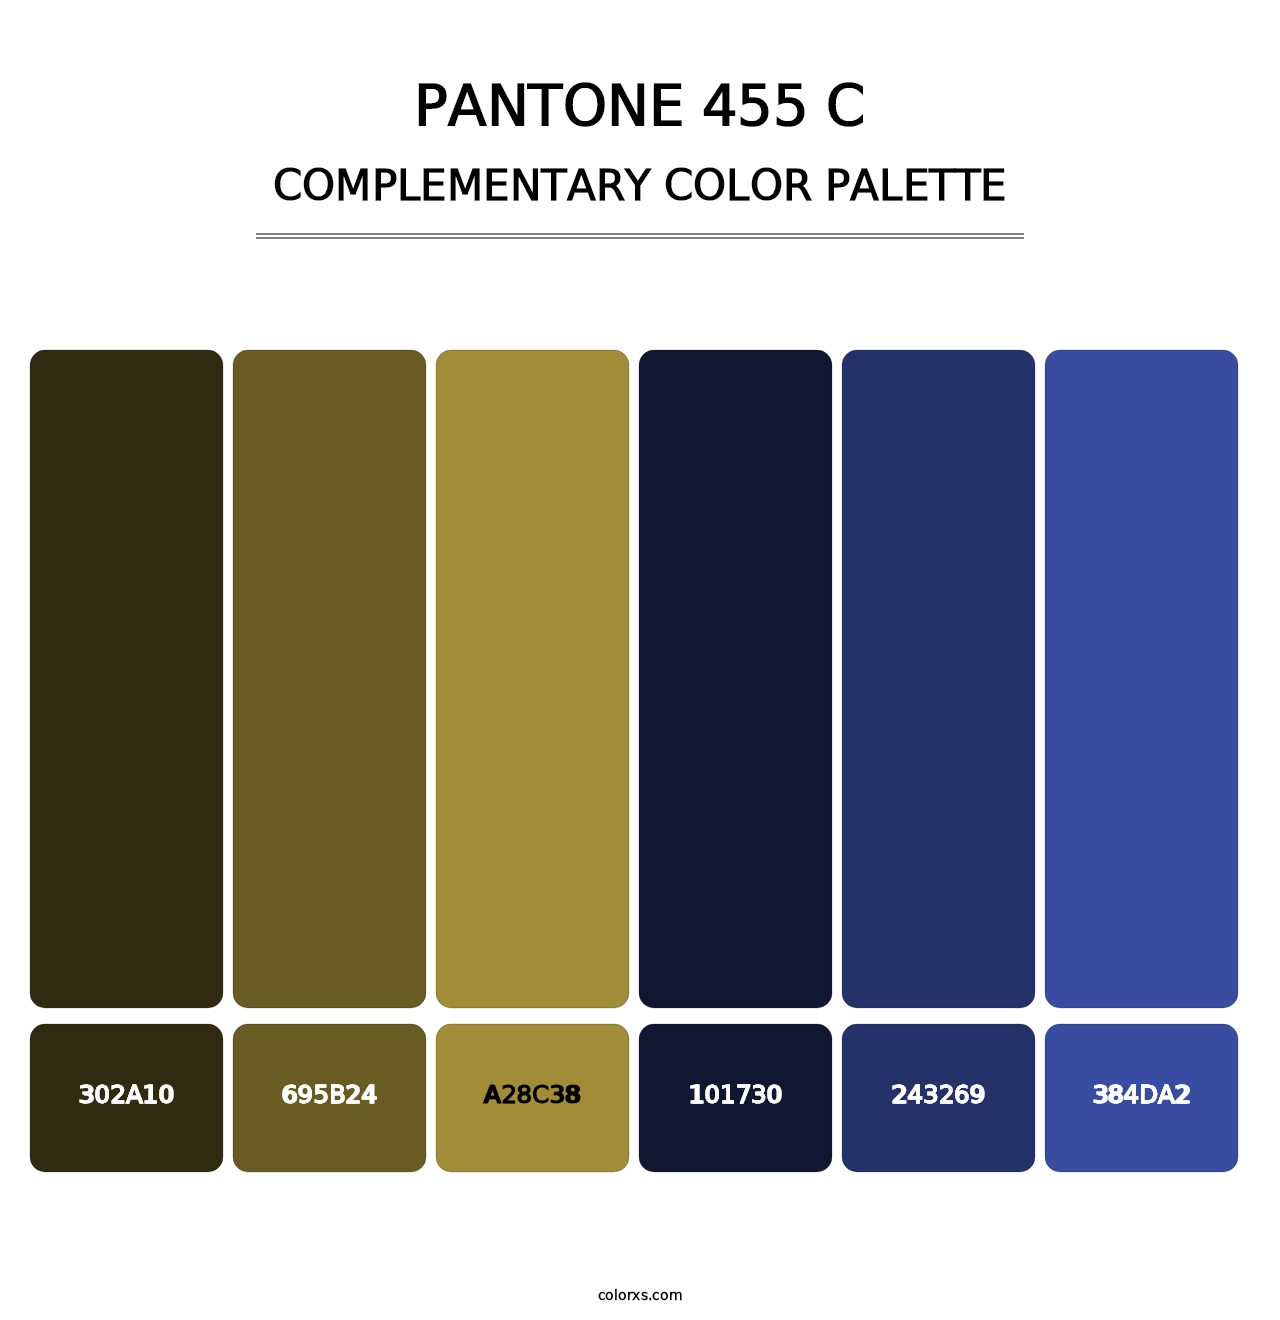 PANTONE 455 C - Complementary Color Palette